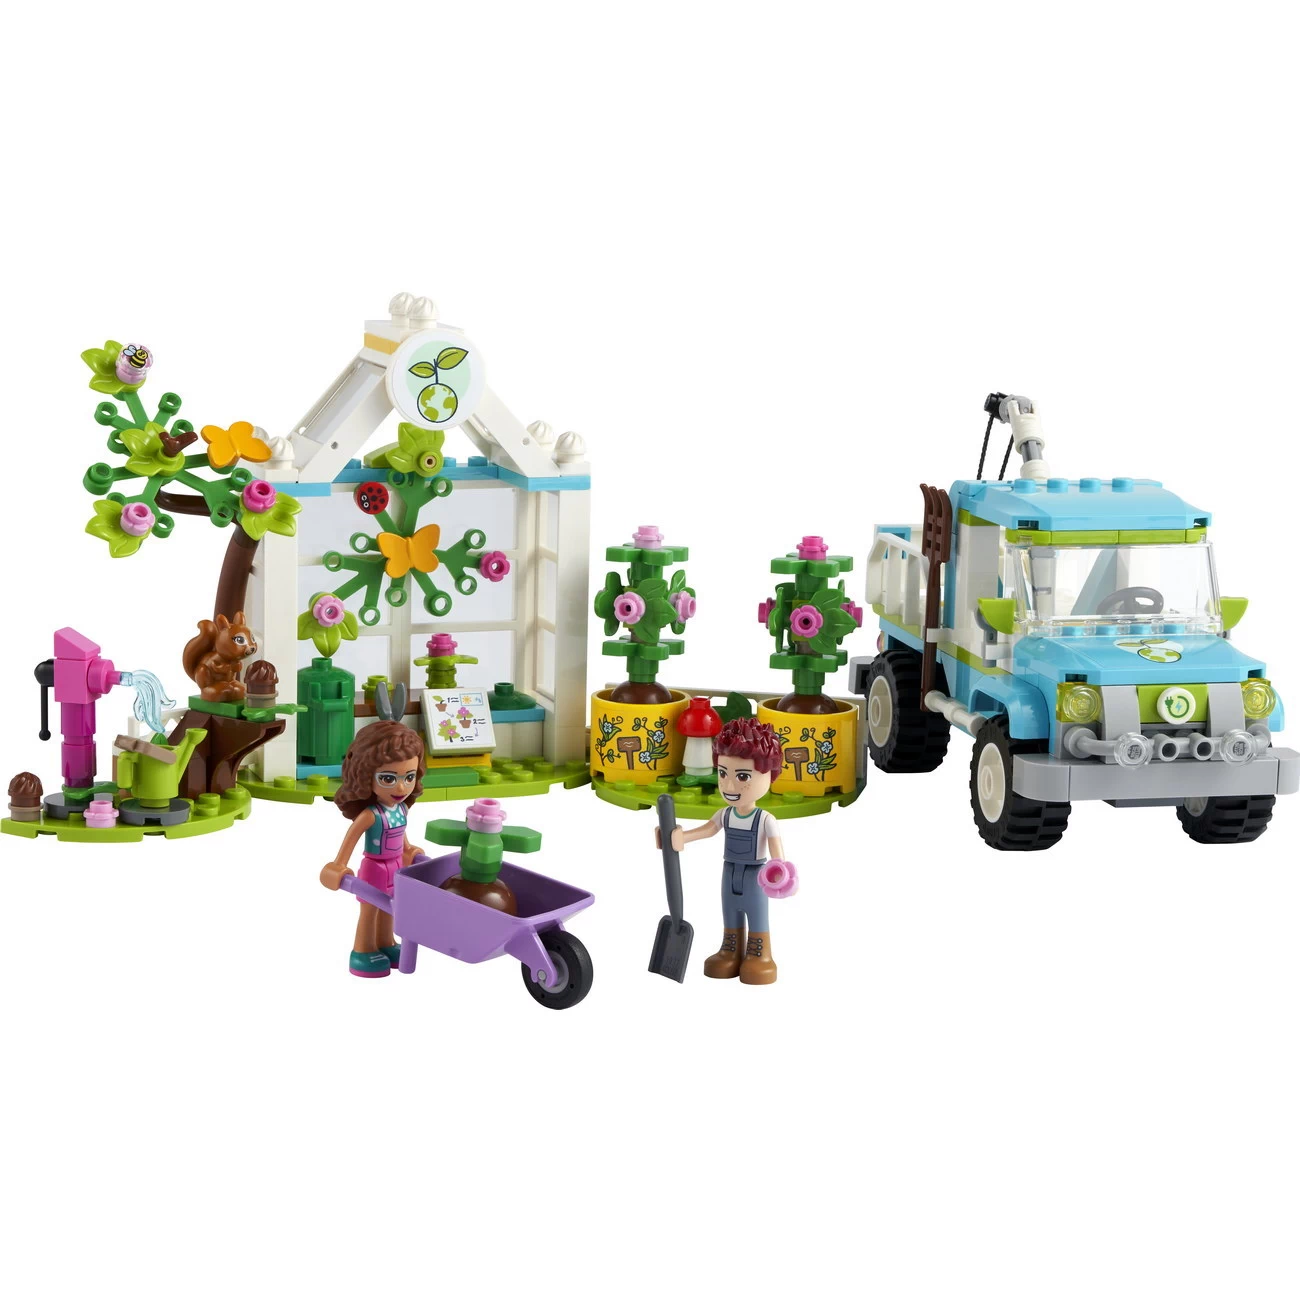 LEGO Friends 41707 - Baumpflanzungsfahrzeug